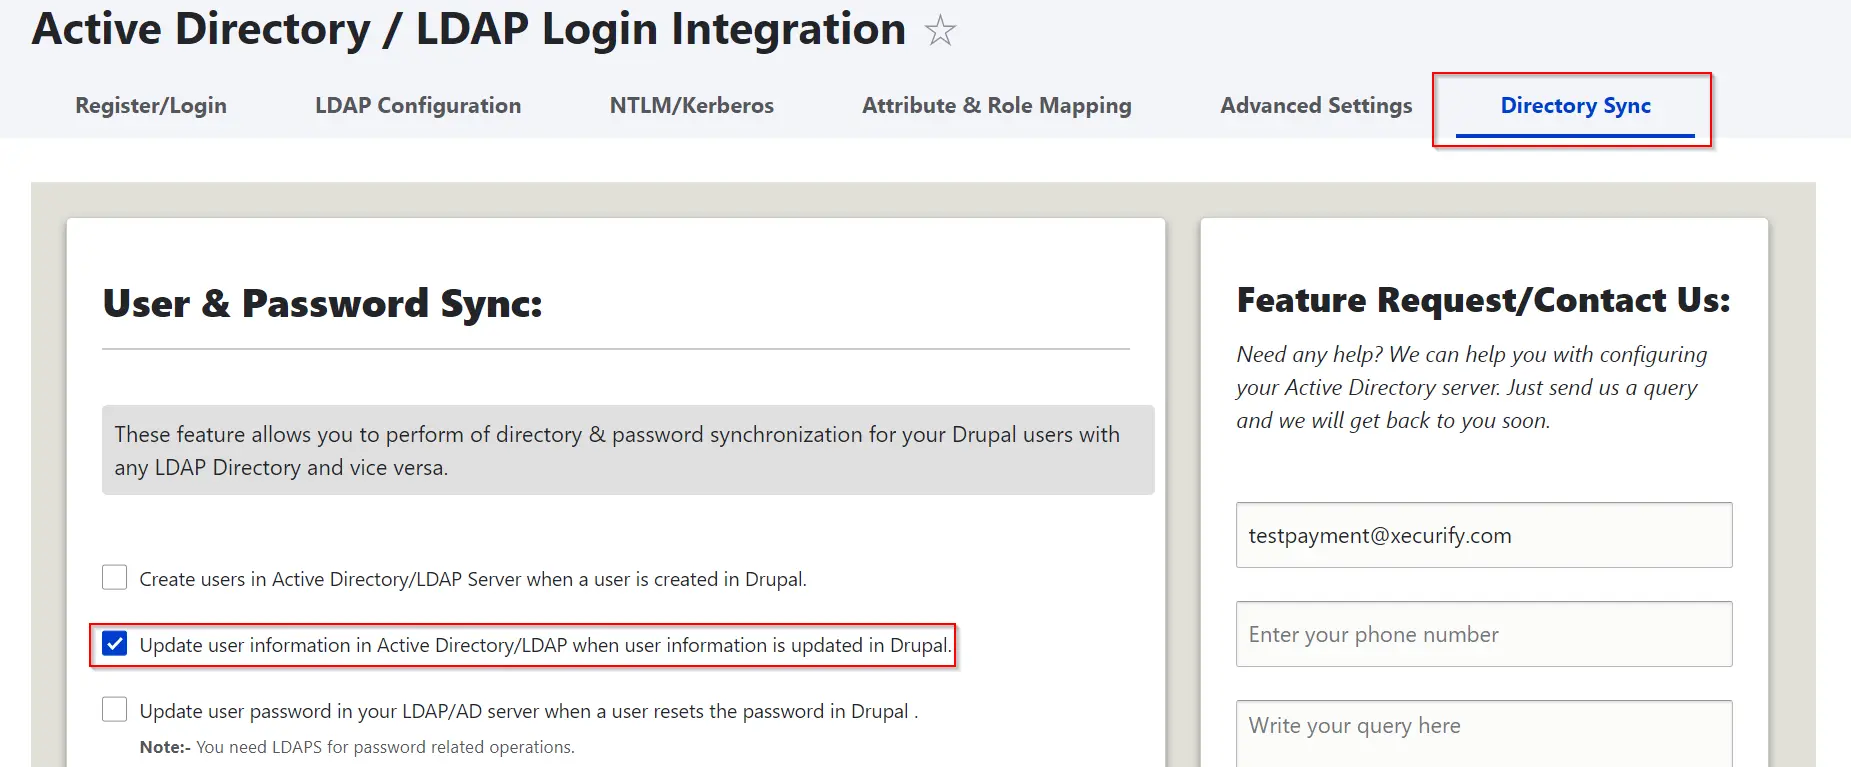 miniorange icon active directory integration LDAP integration